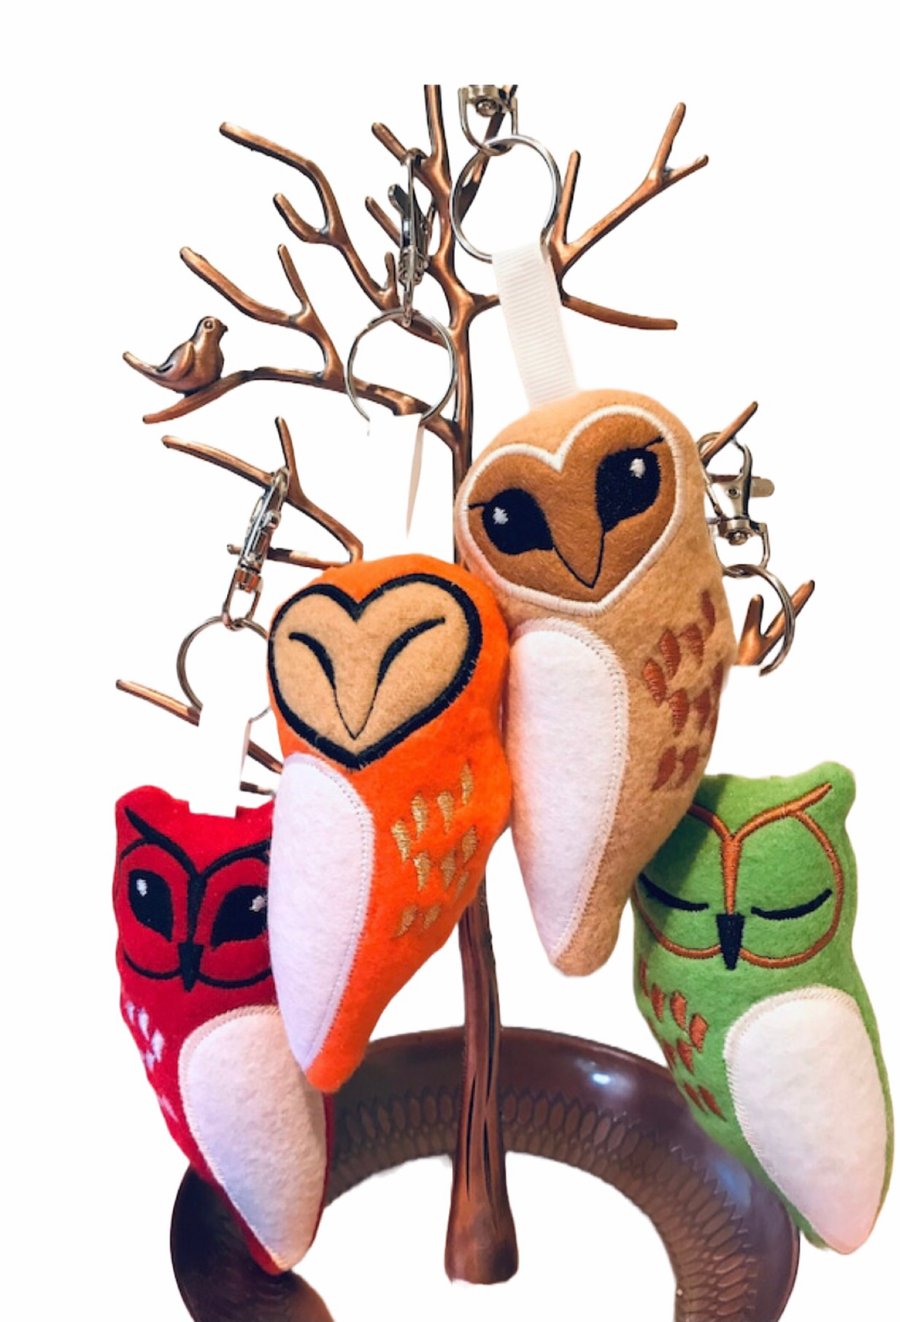 Owl Keyrings - Felt Owl Gifts - Key ring with Owls - Wildlife Gift - Keyfob